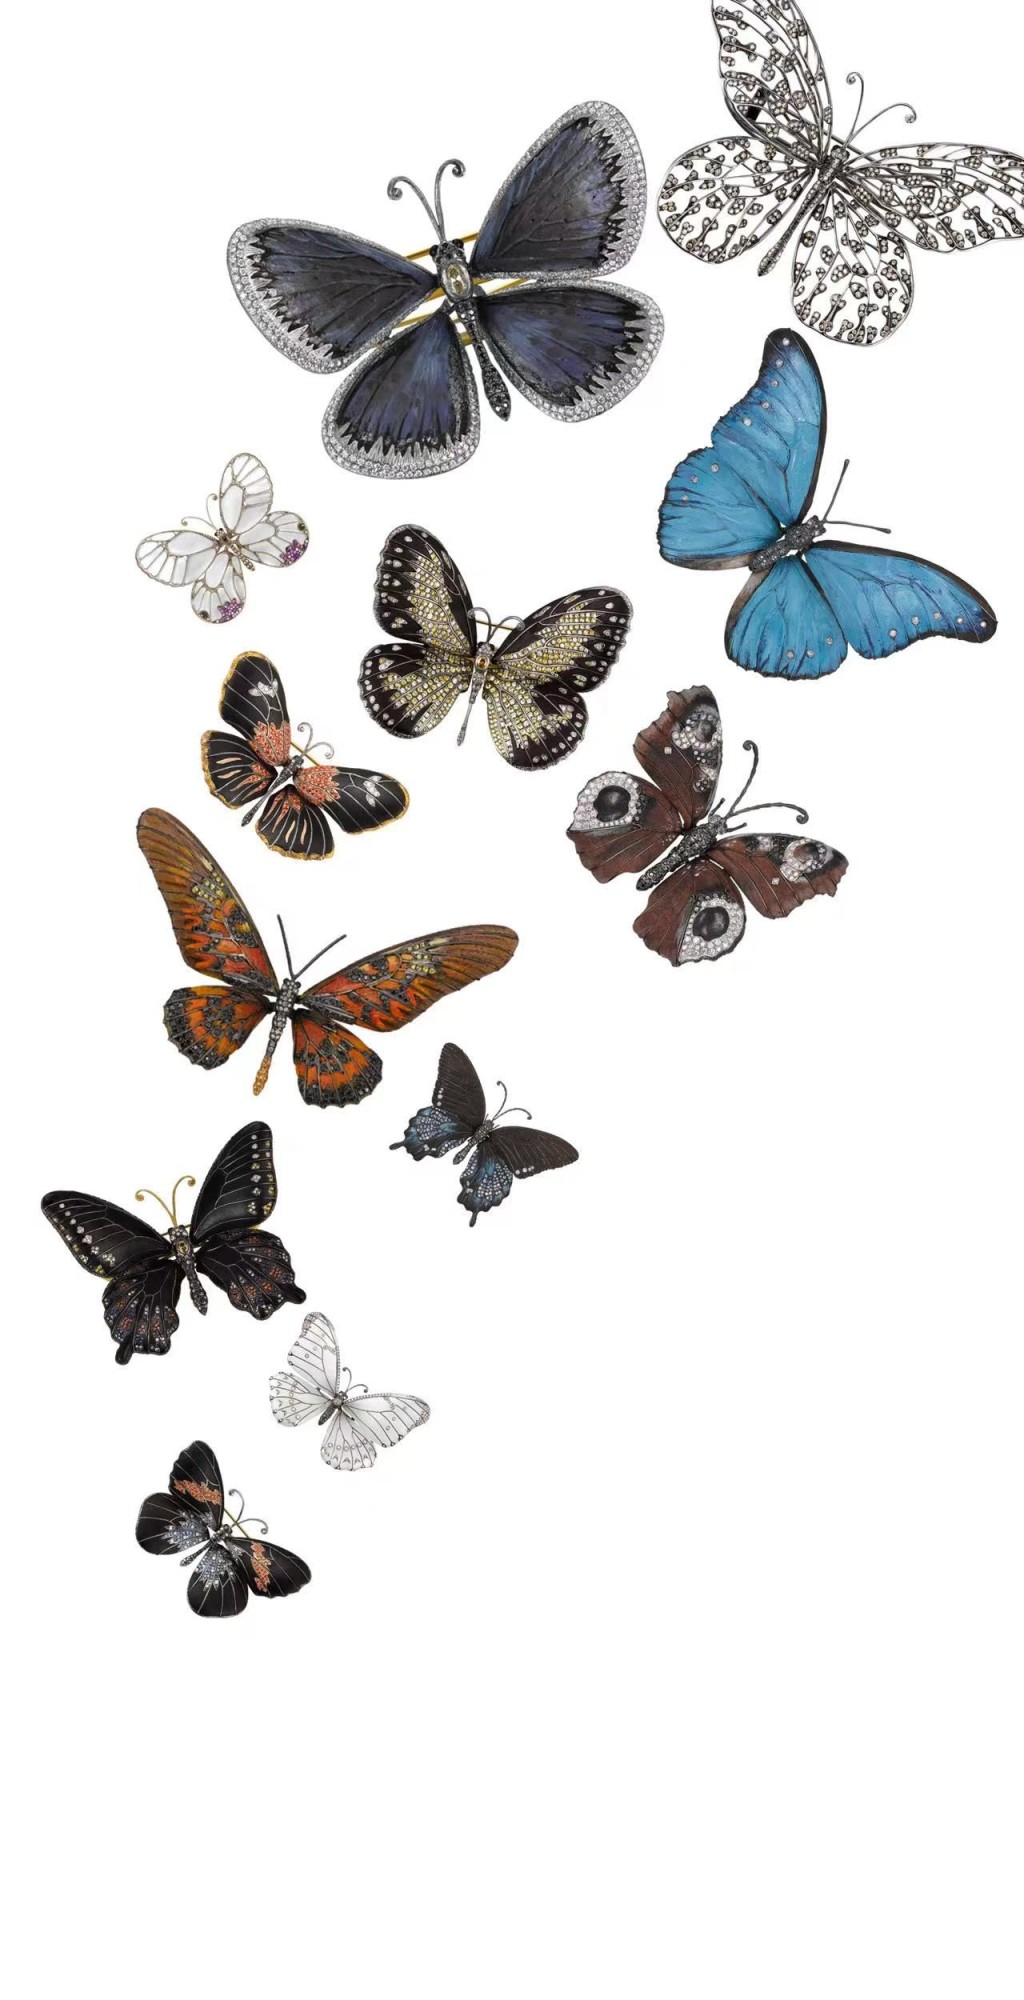 Dickson著名的《莊周夢蝶》系列，選取不同的木素材如巴西孿葉蘇木、酸枝木、花梨木、黃檀木等，搭配豐富多姿的寶石，塑造翅膀斑蘭的各式蝴蝶。